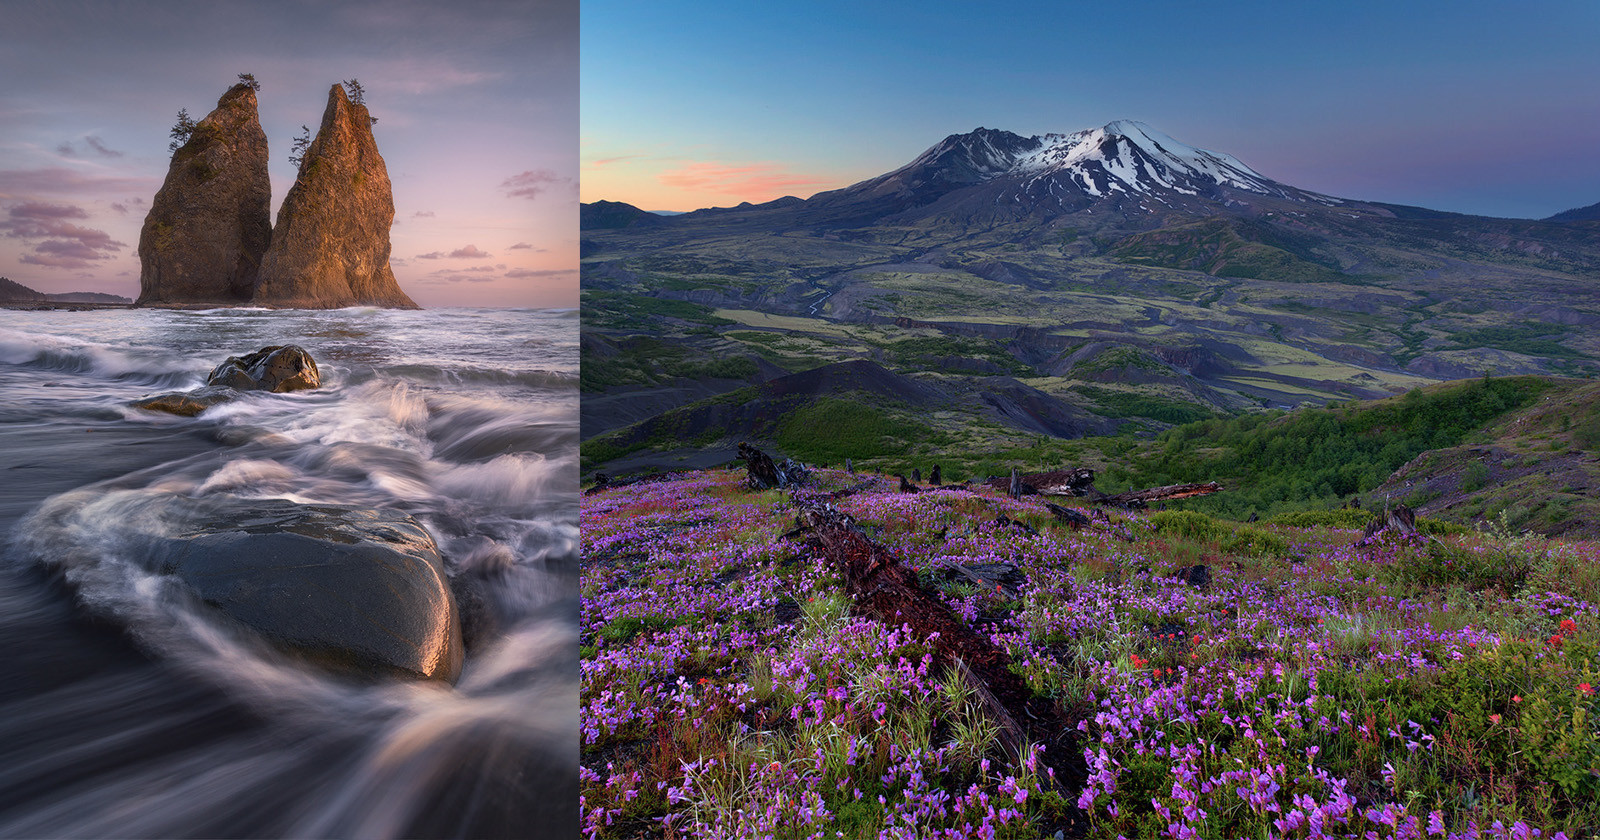 Washington State’s Striking Beauty Through the Eyes of 7 Photographers